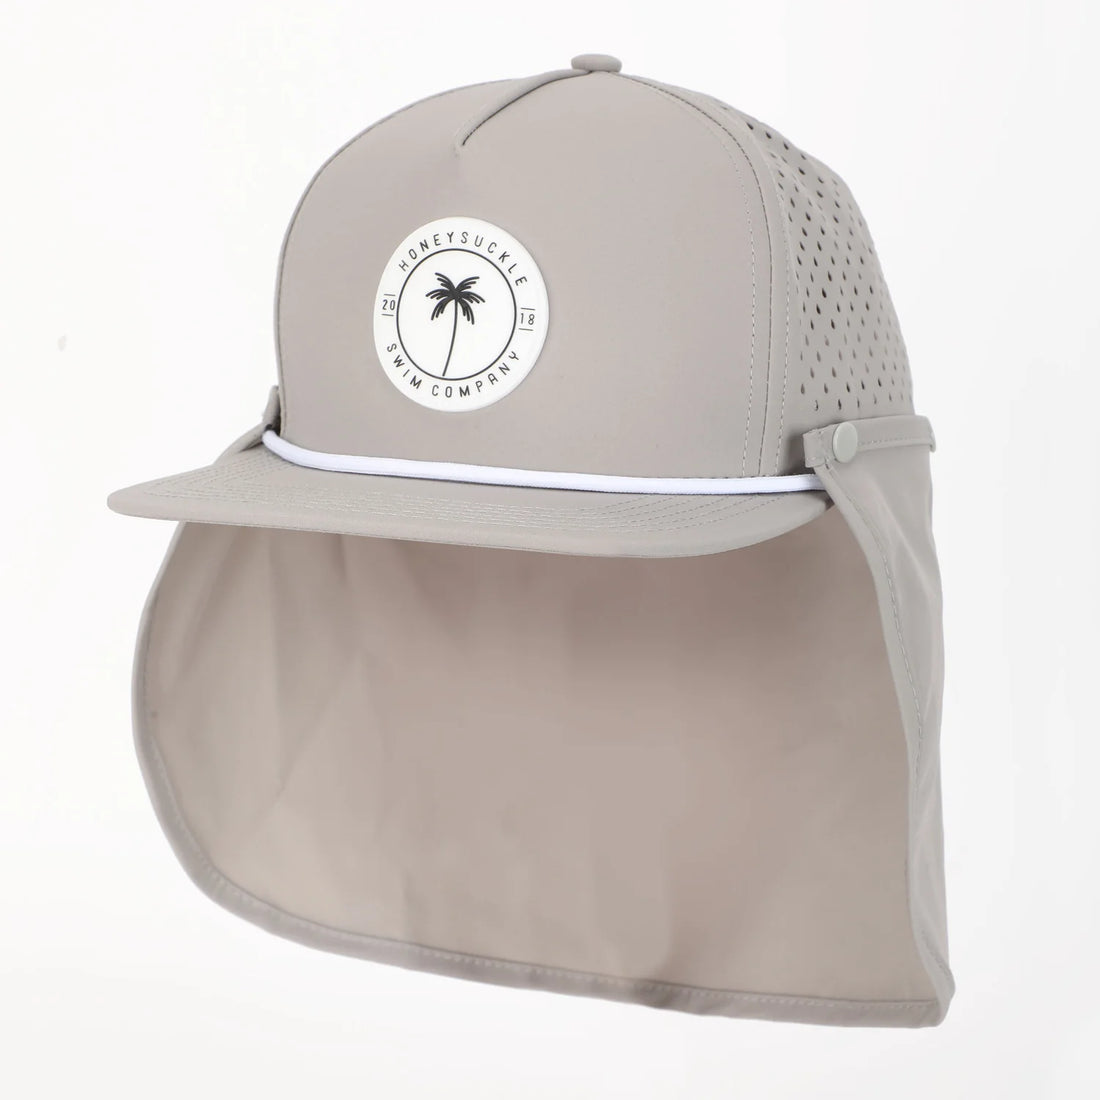 Honeysuckle Swim Co - Snapback Hat (Warm Gray)